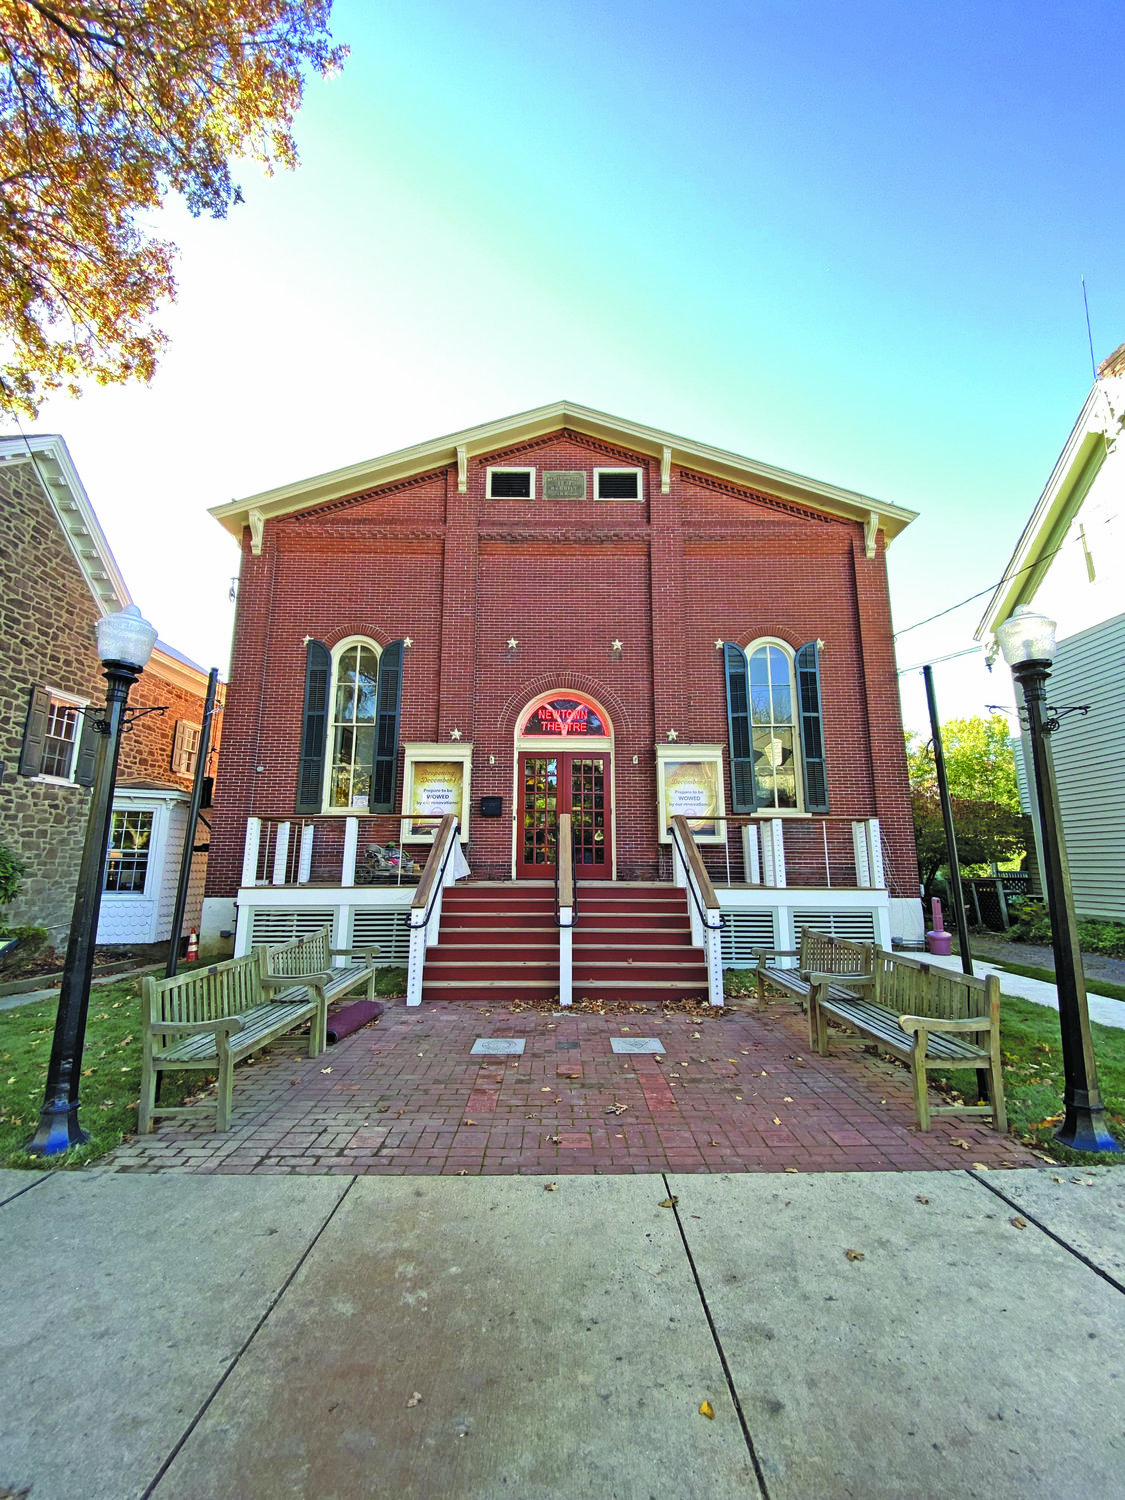 The historic Newtown Theatre